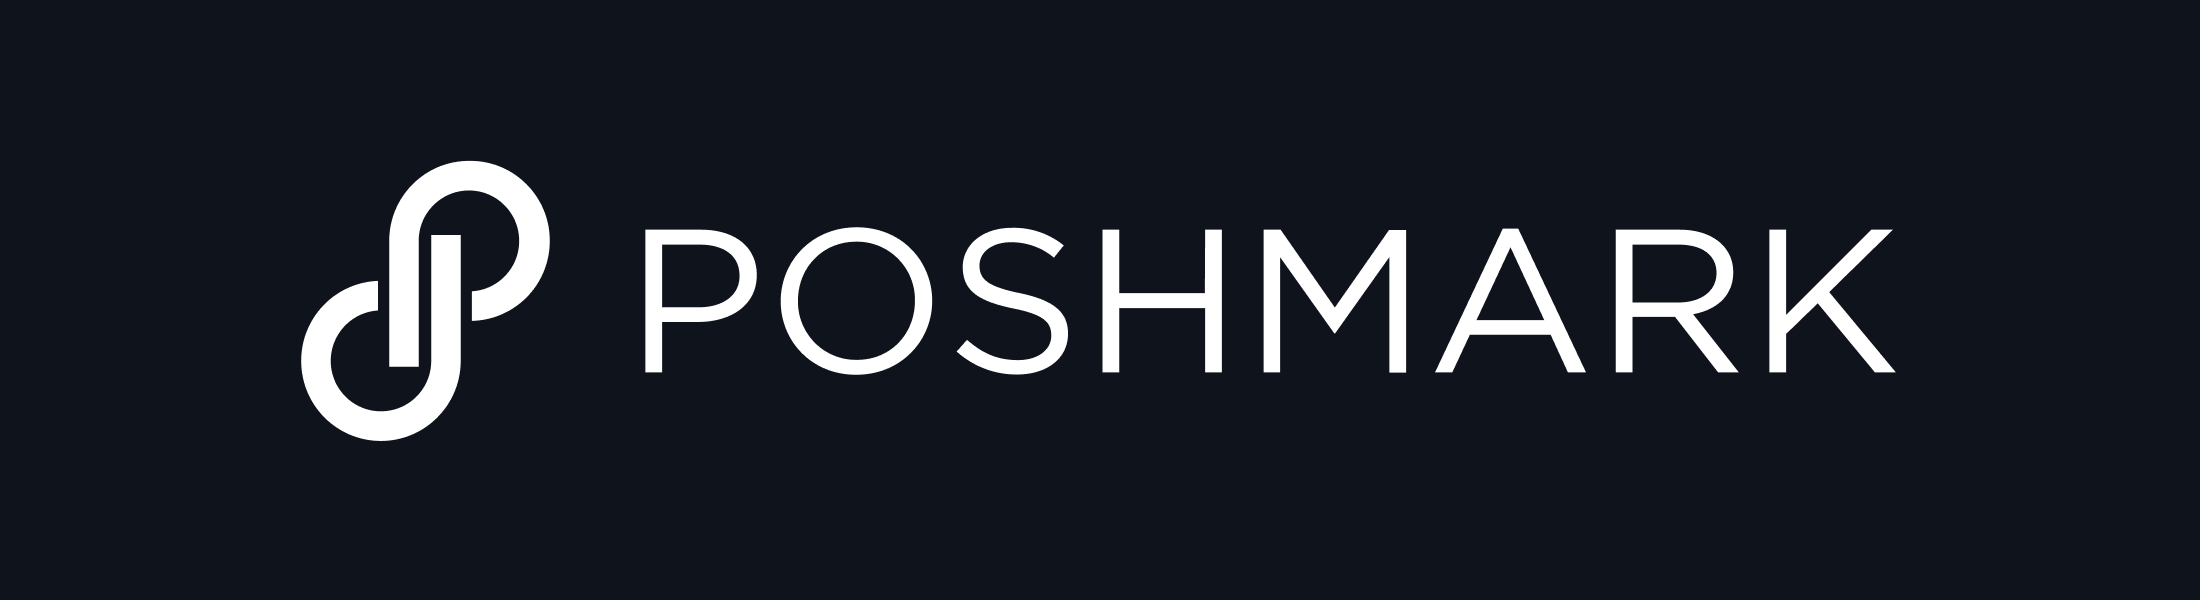 logo-Poshmark-case-studies